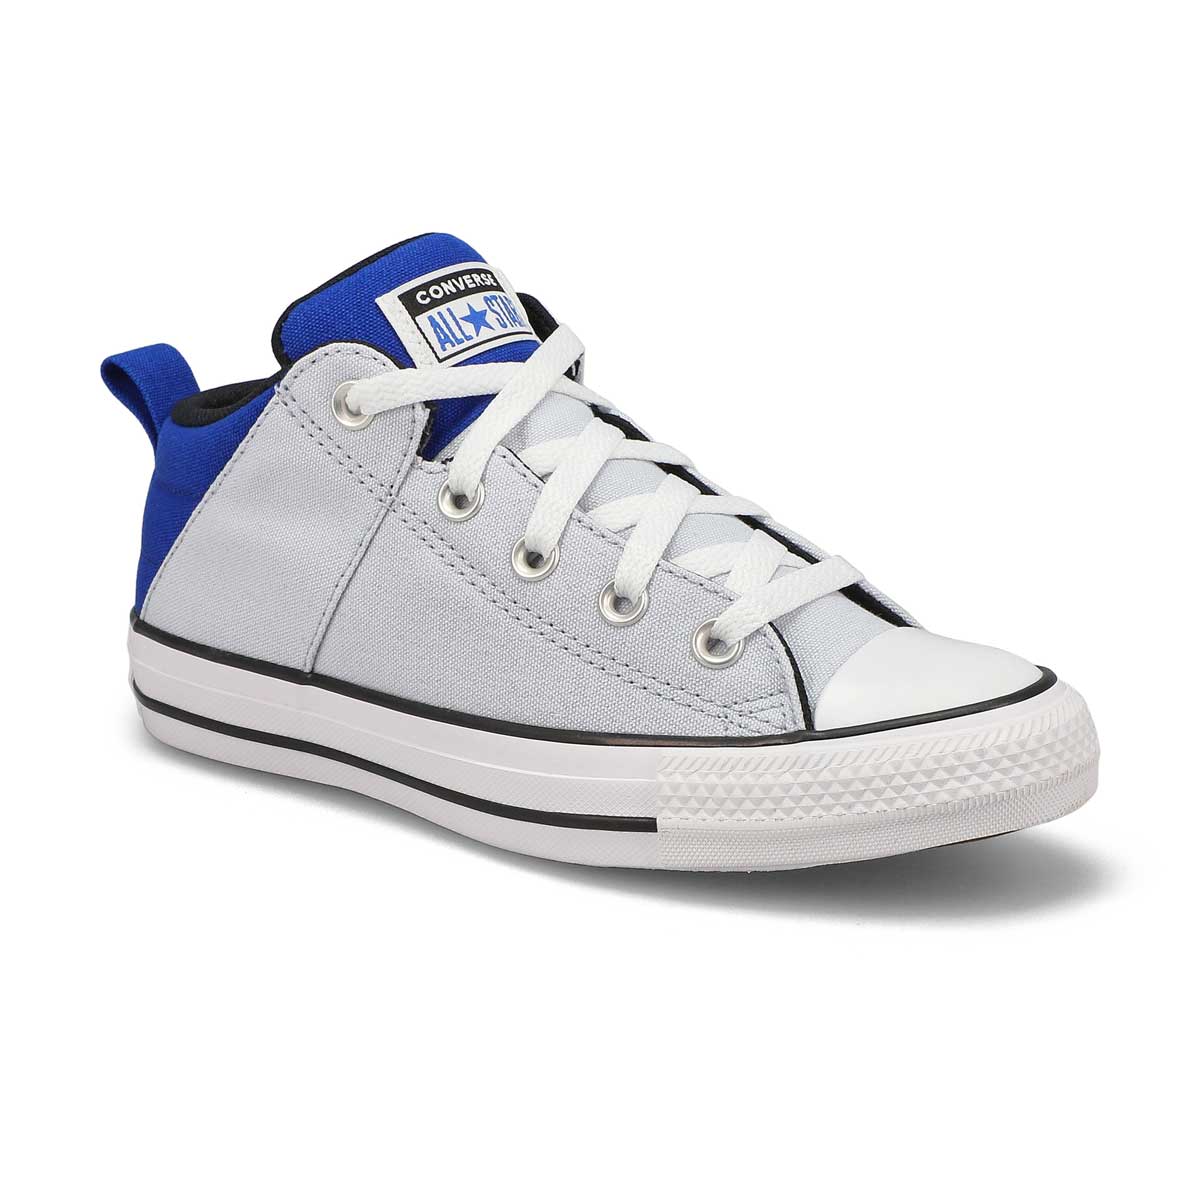 Boys' Chuck Taylor All Star Axel Retro Sport Block Sneaker - Ghost/Blue